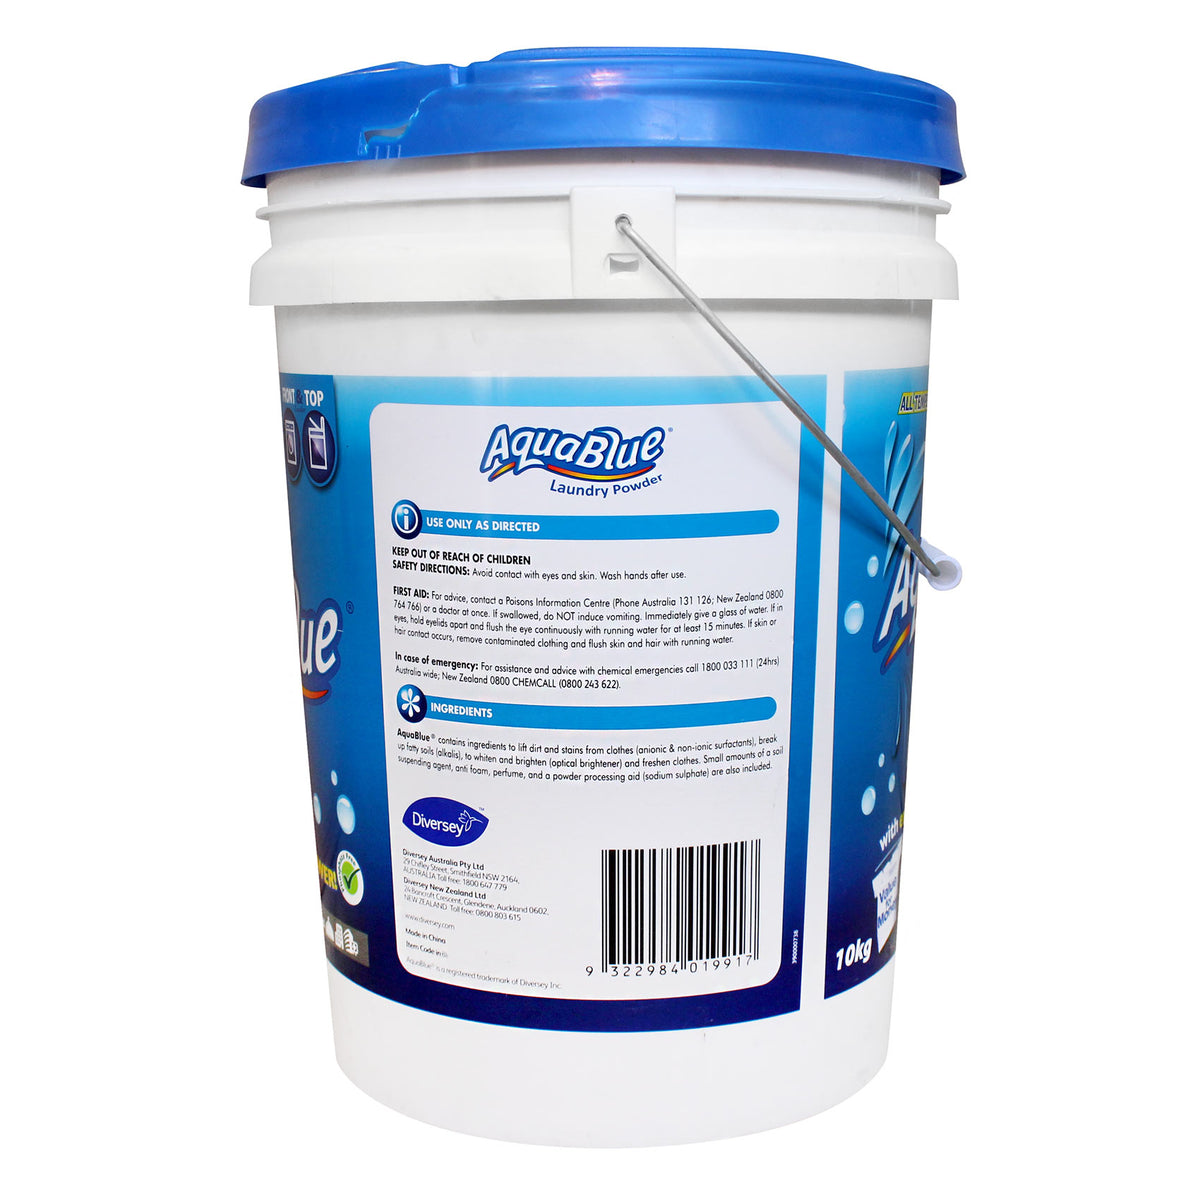 Aquablue Laundry Powder 10kg